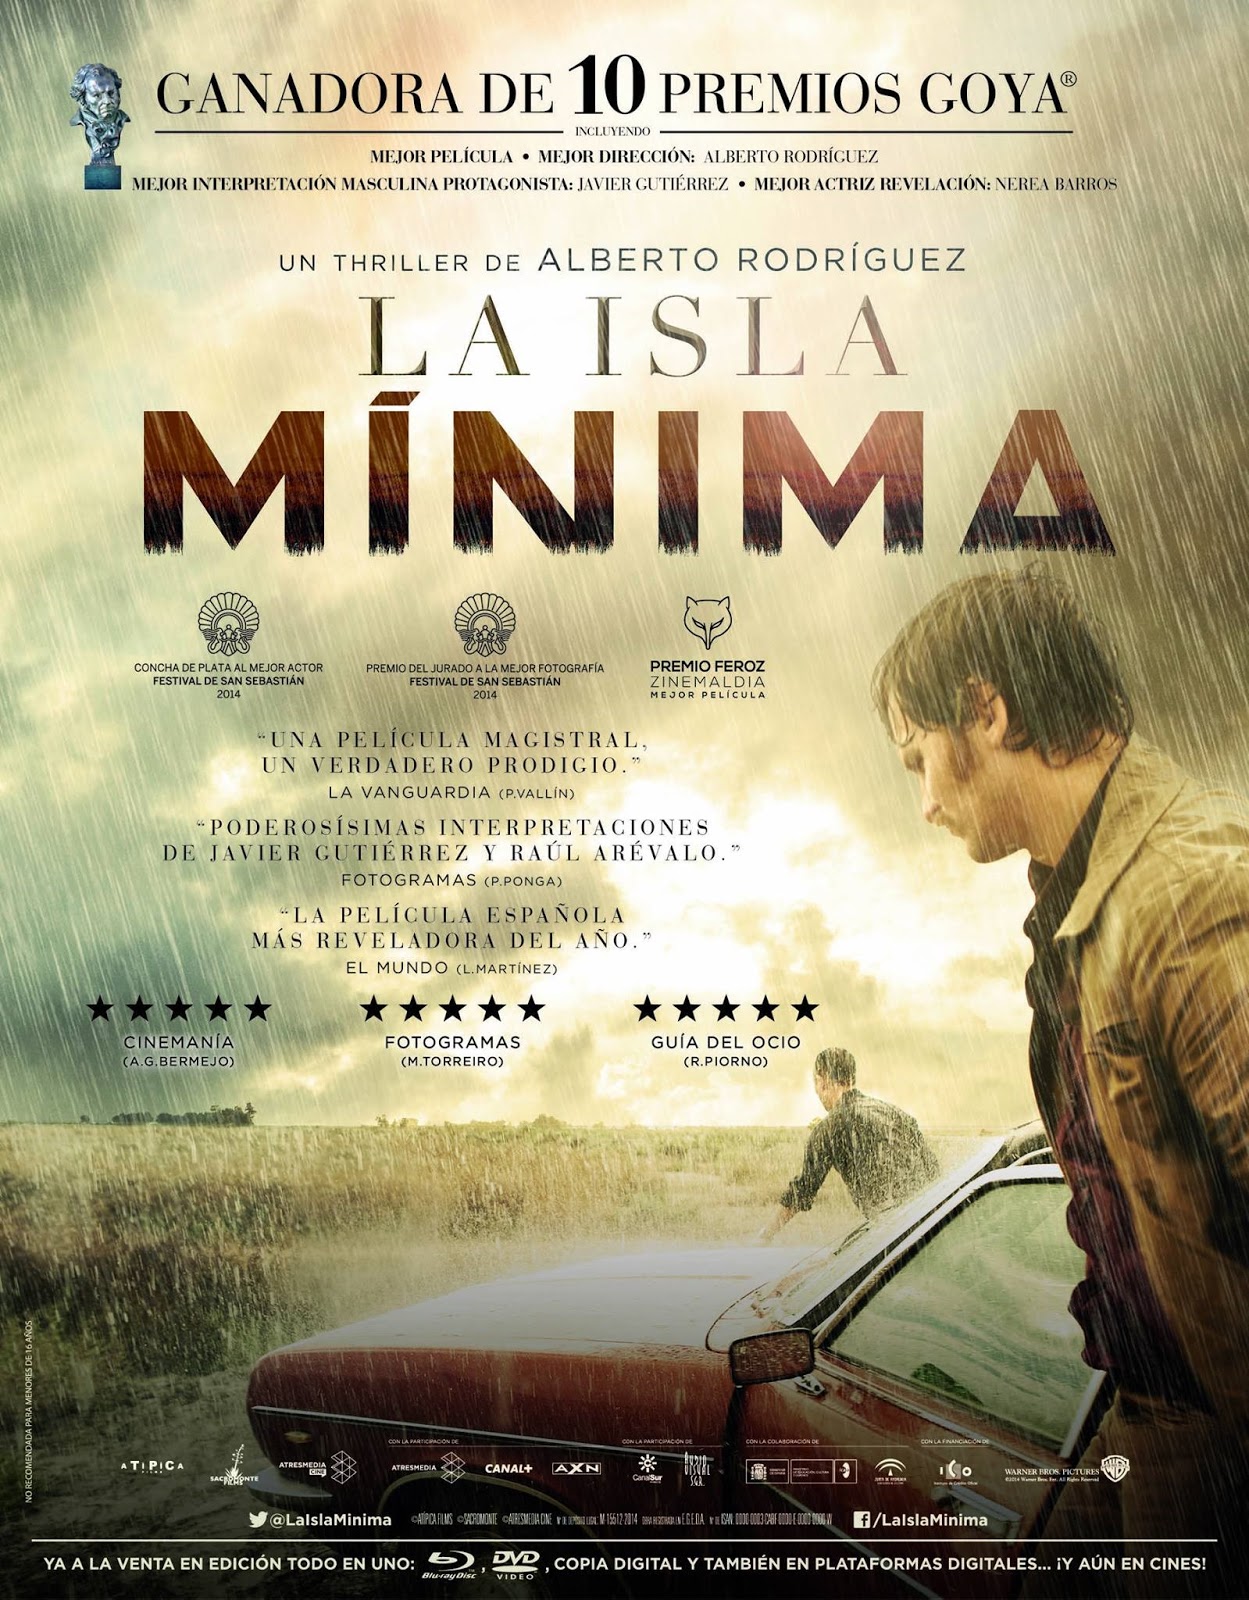 Stiahni si Filmy CZ/SK dabing  Mokřina / La isla mínima (2014)(CZ)[WebRip][1080p] = CSFD 76%